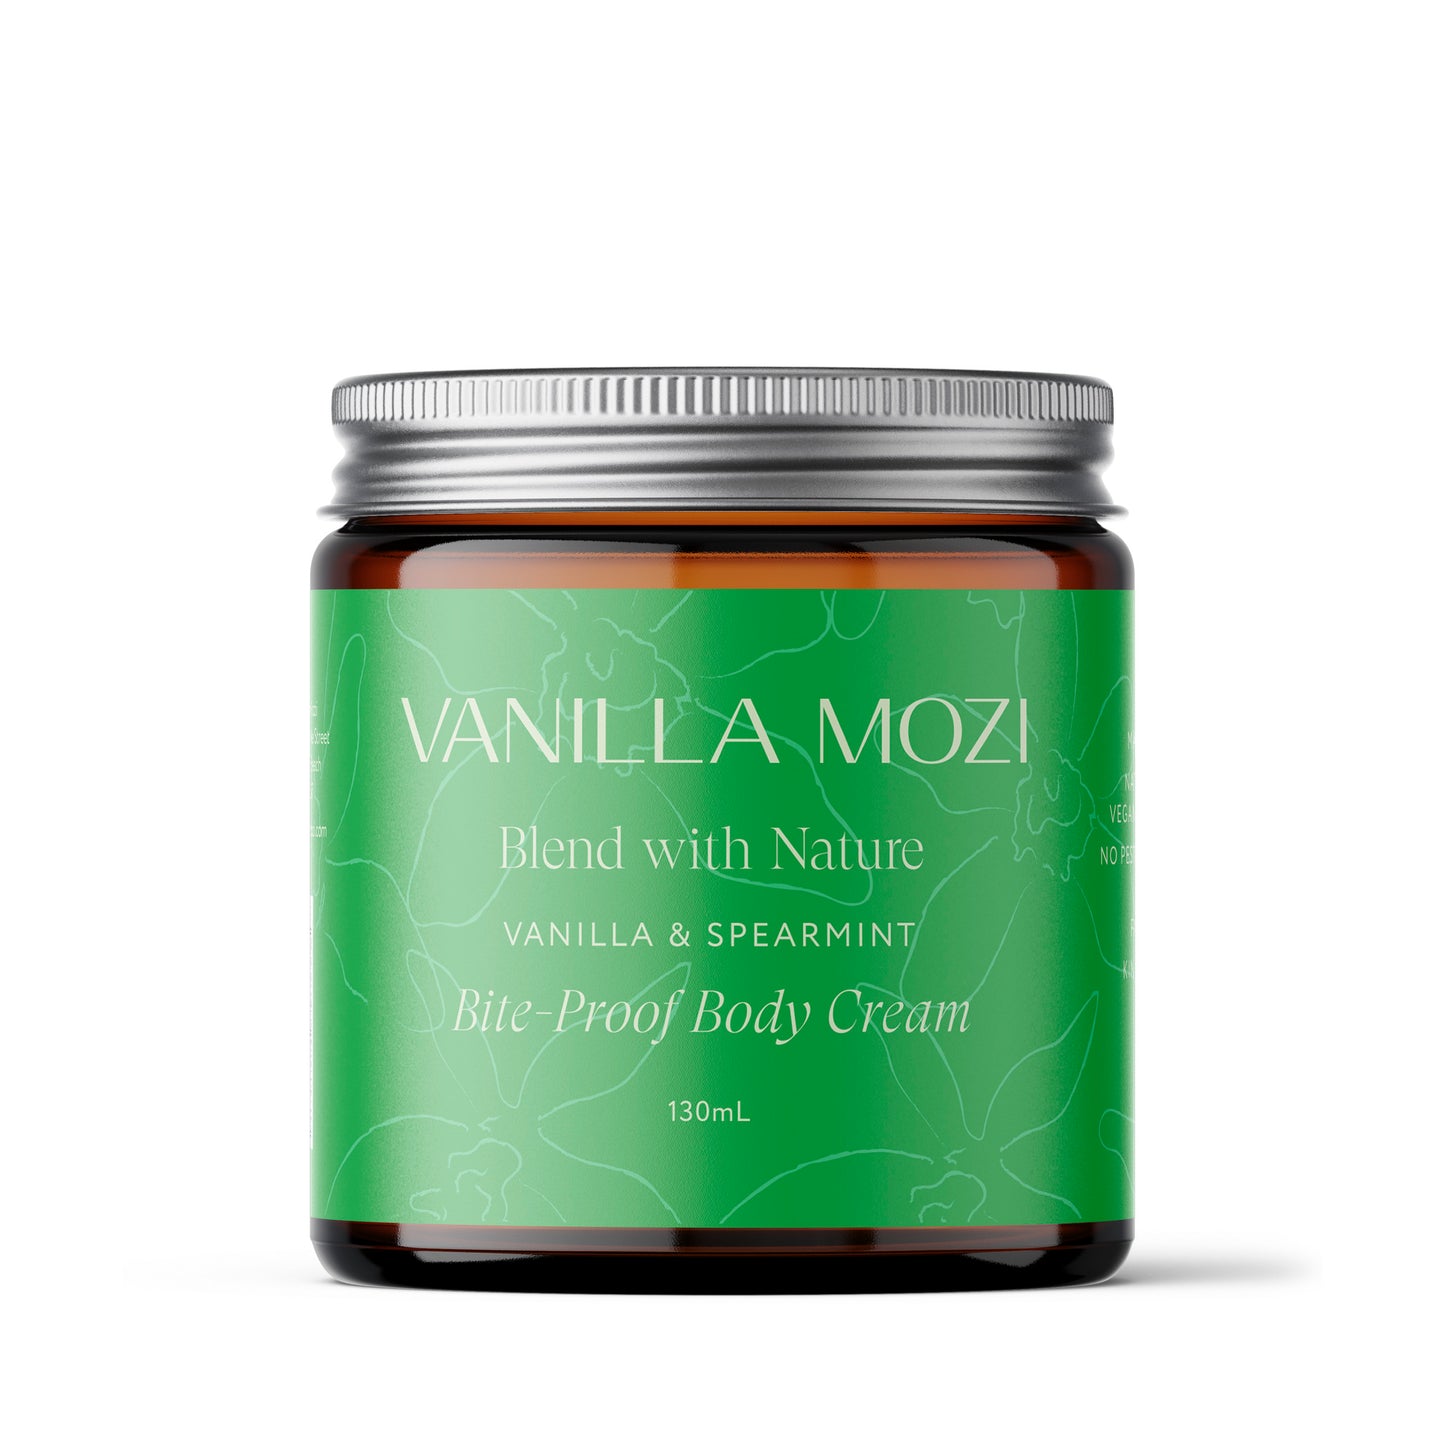 Vanilla Mozi Bite-Proof Body Cream